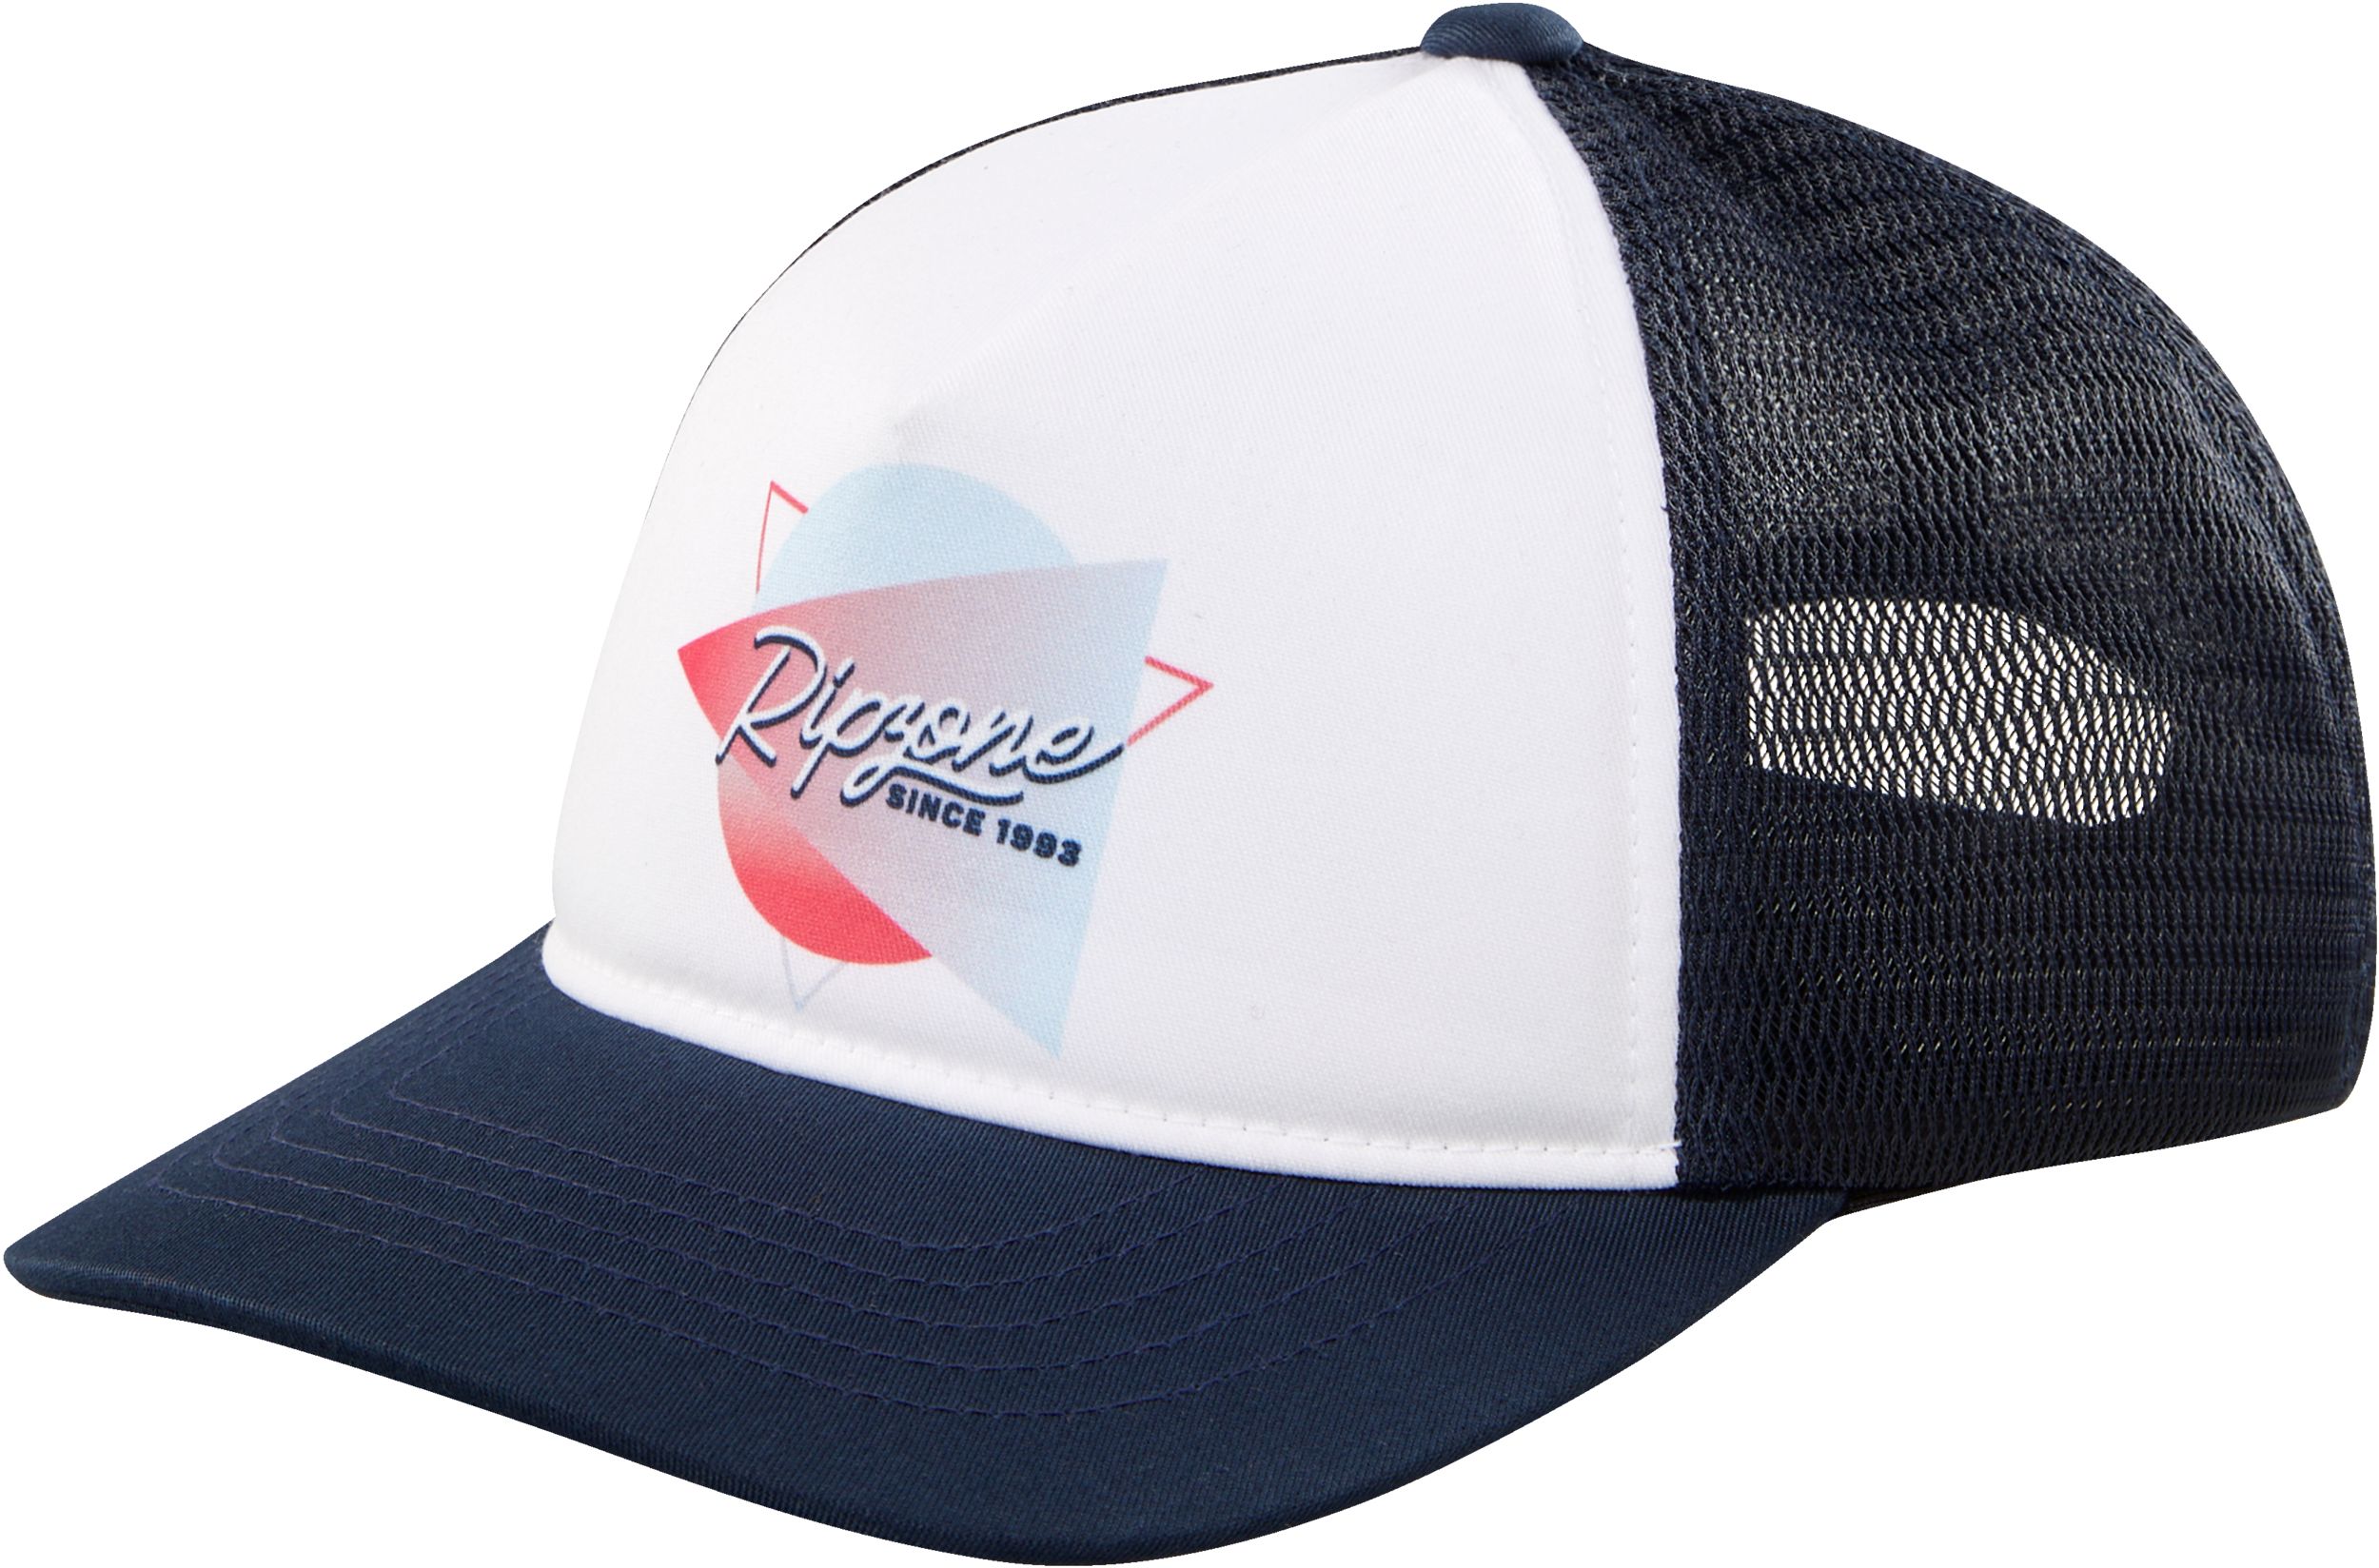 Ripzone Girls' Connaught Trucker Snapback Hat